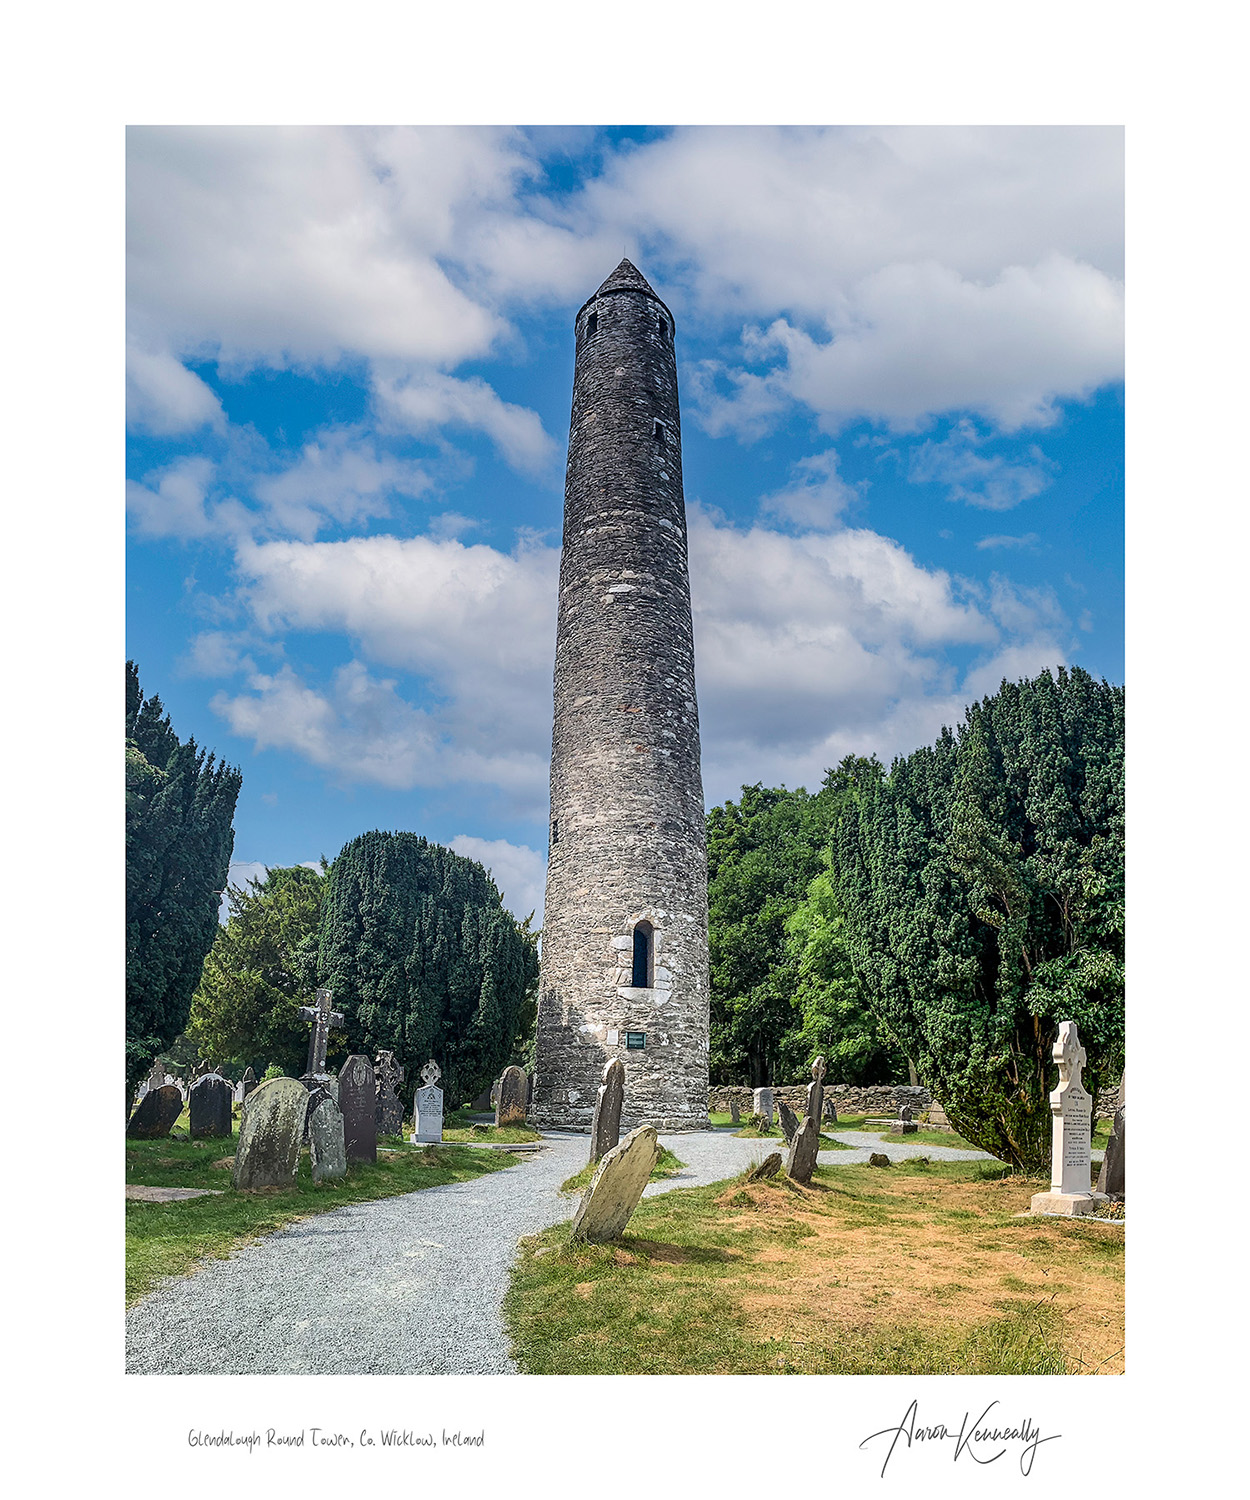 Glendalough Round Tower, Glendalough, Co. Wicklow